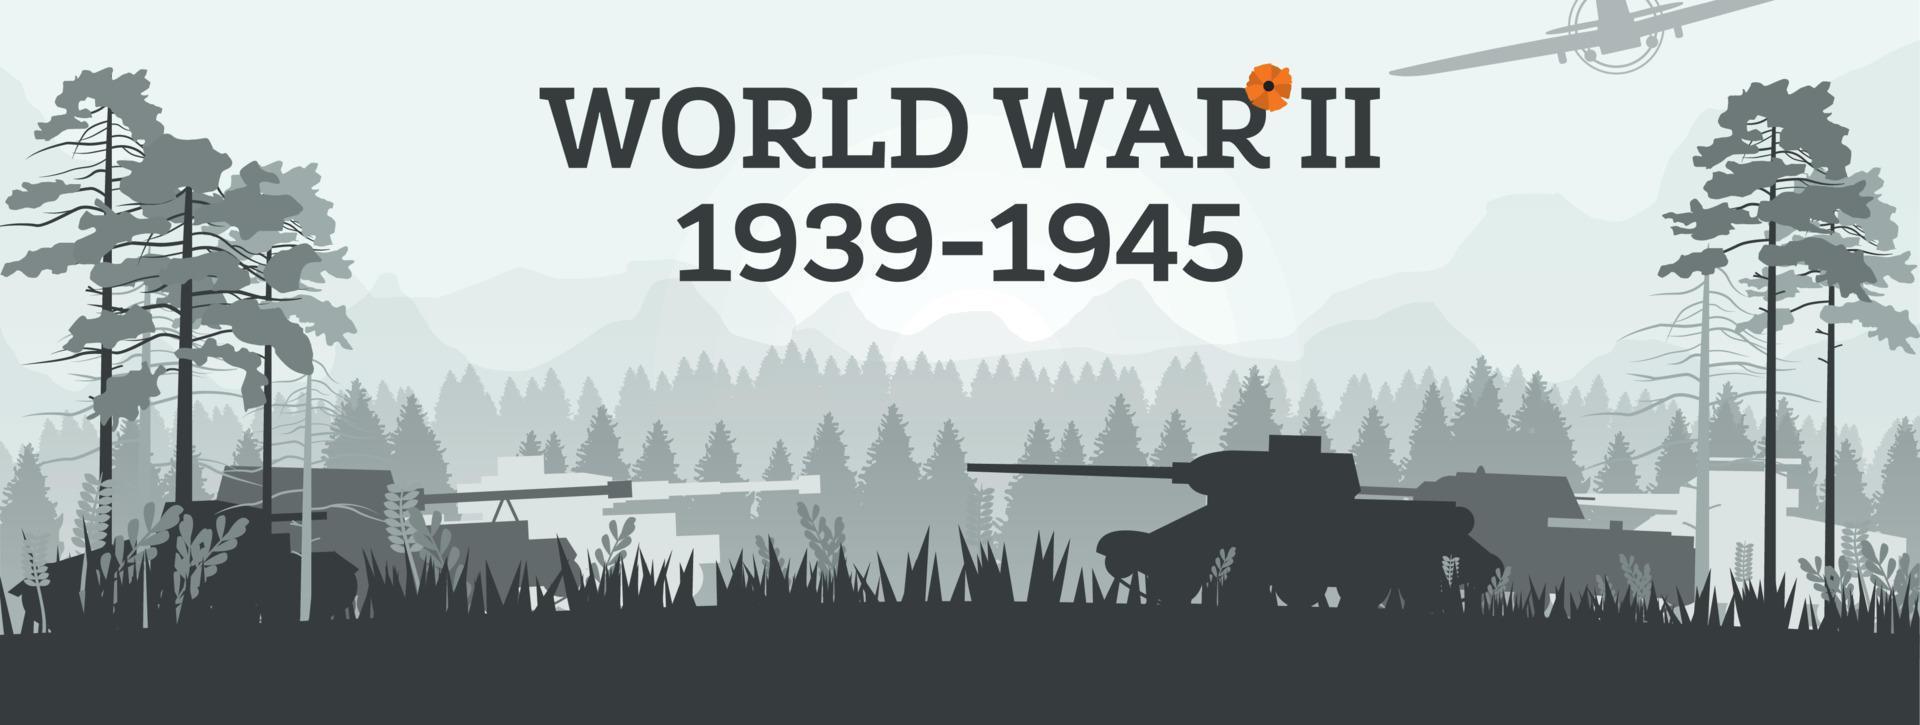 Segunda Guerra Mundial 1939-1945. conceito militar com tanques na floresta. teatro de guerra. vetor